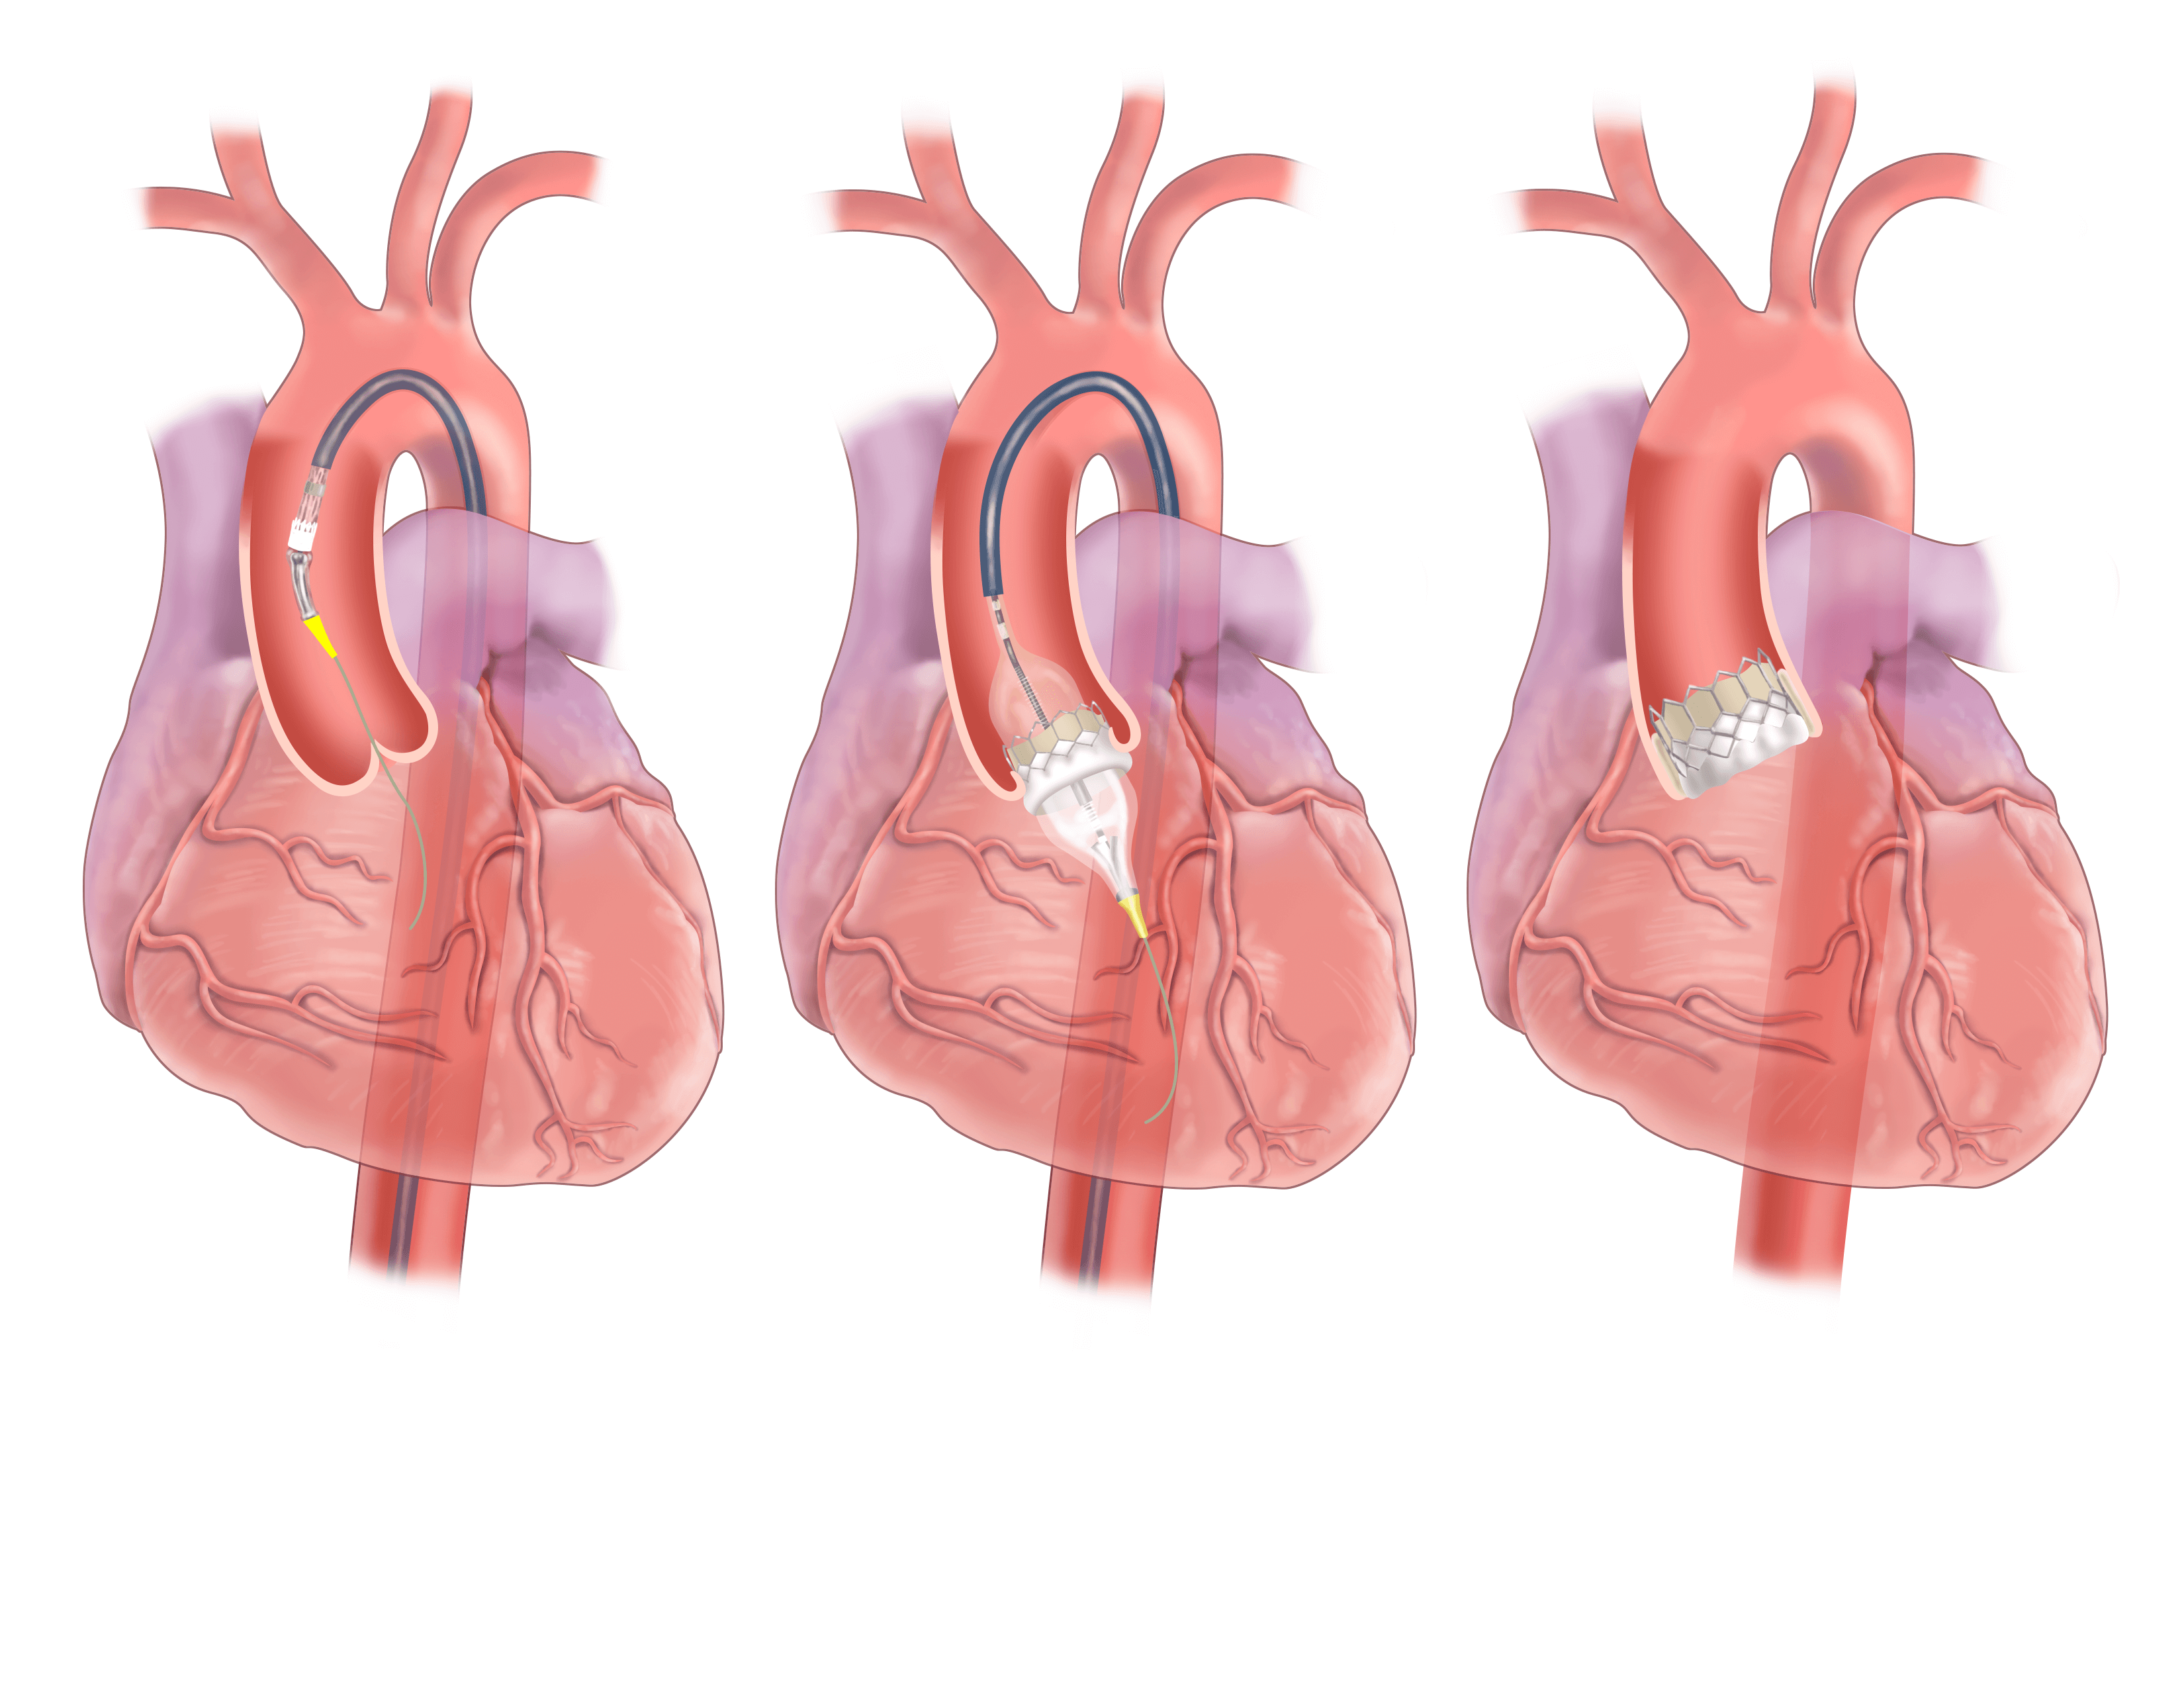 Transcatheter aortic valve implantation